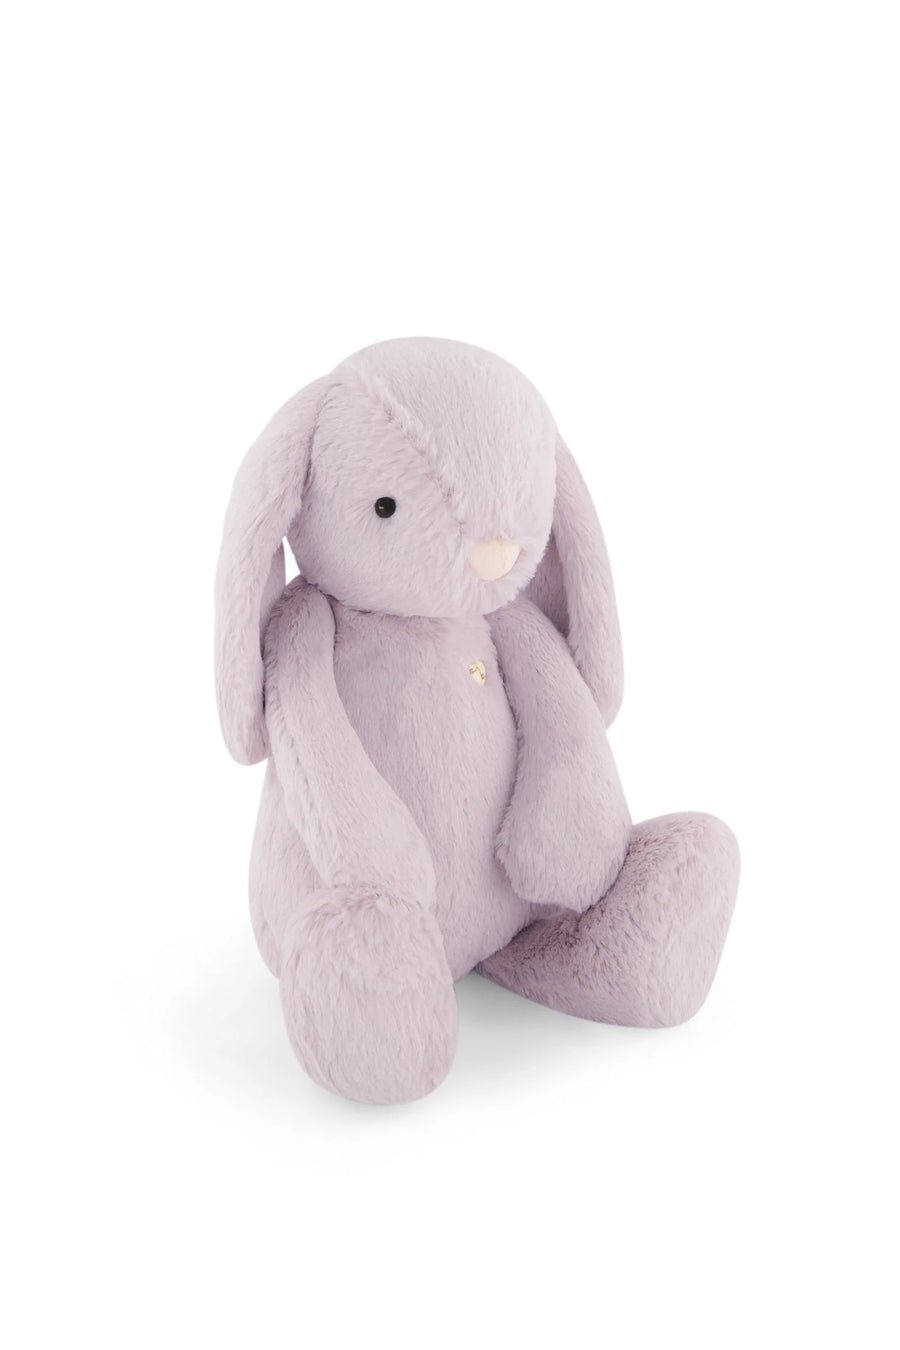 Snuggle Bunny -  Penelope - Violet 30cm